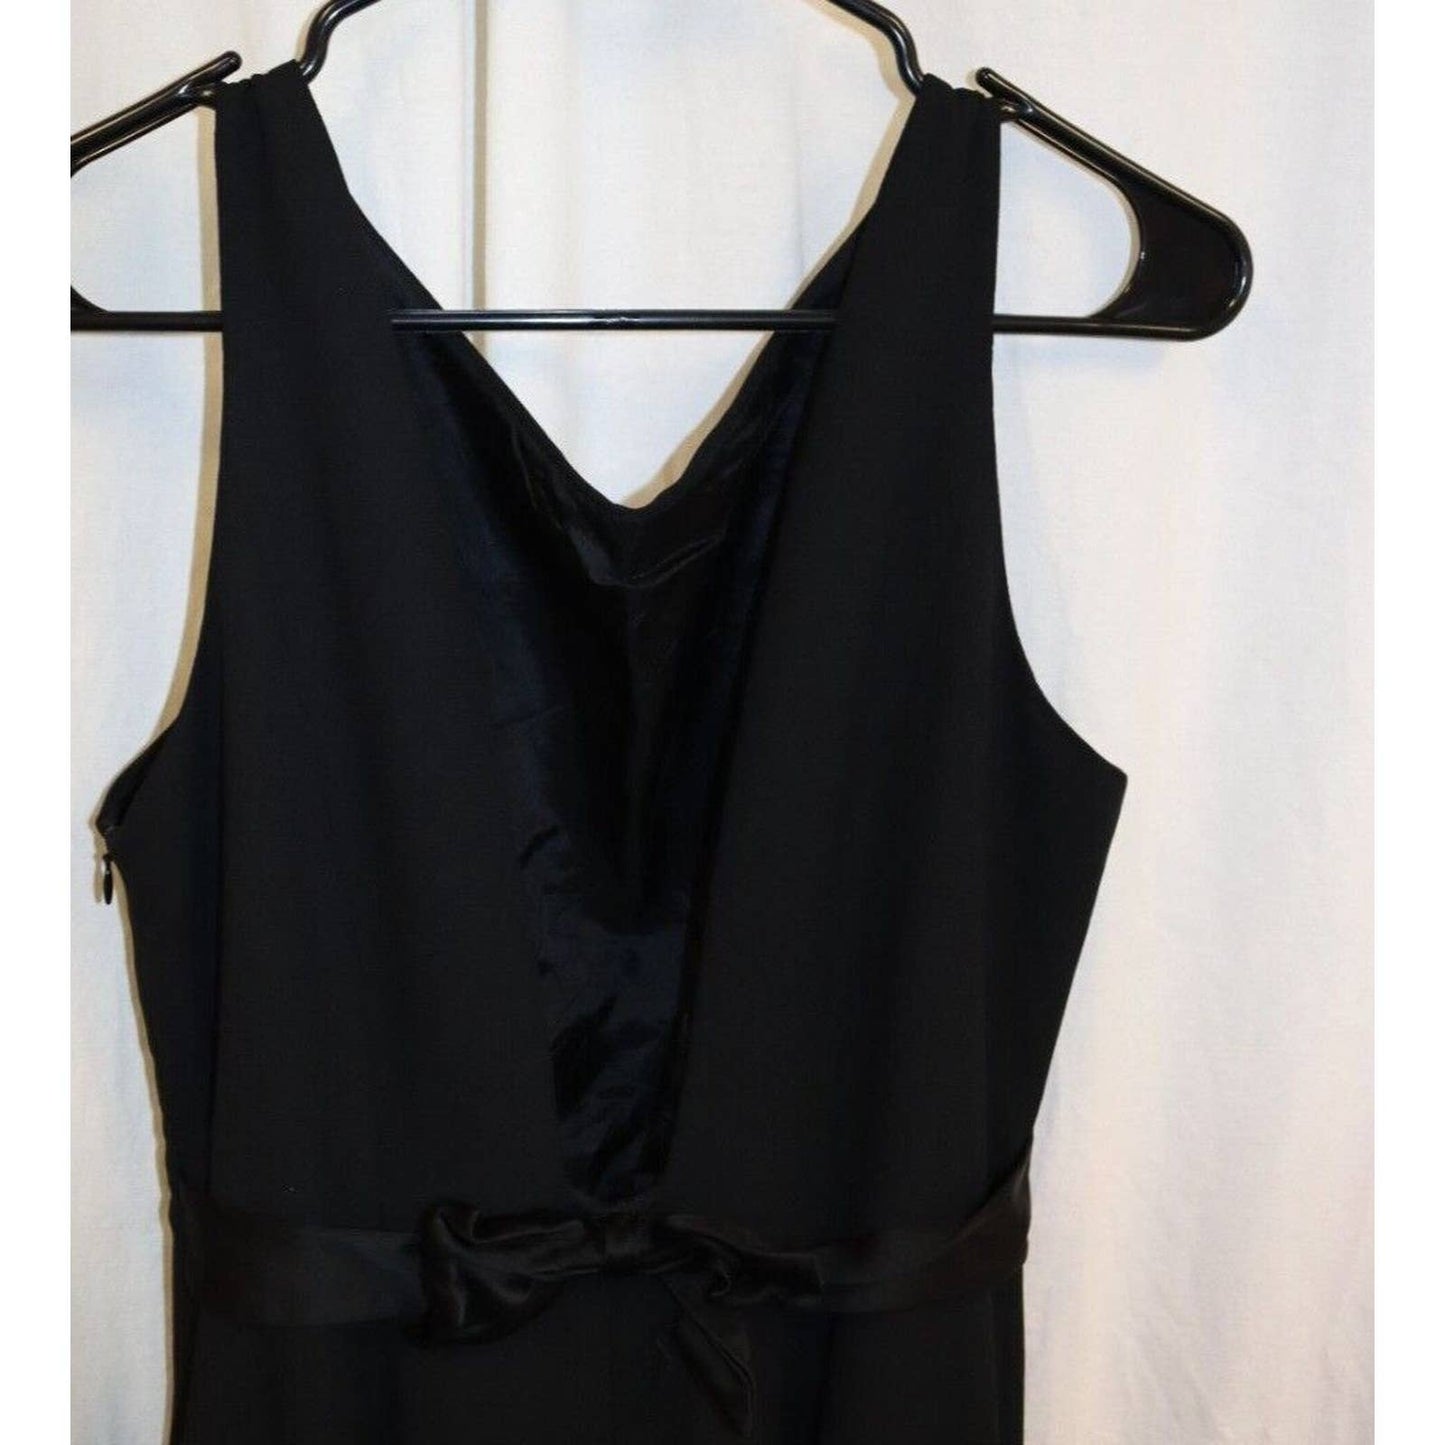 Laundry By Shelli Segal Black Evening Dress Sleeveless V Neck 56" Size 14 (27)